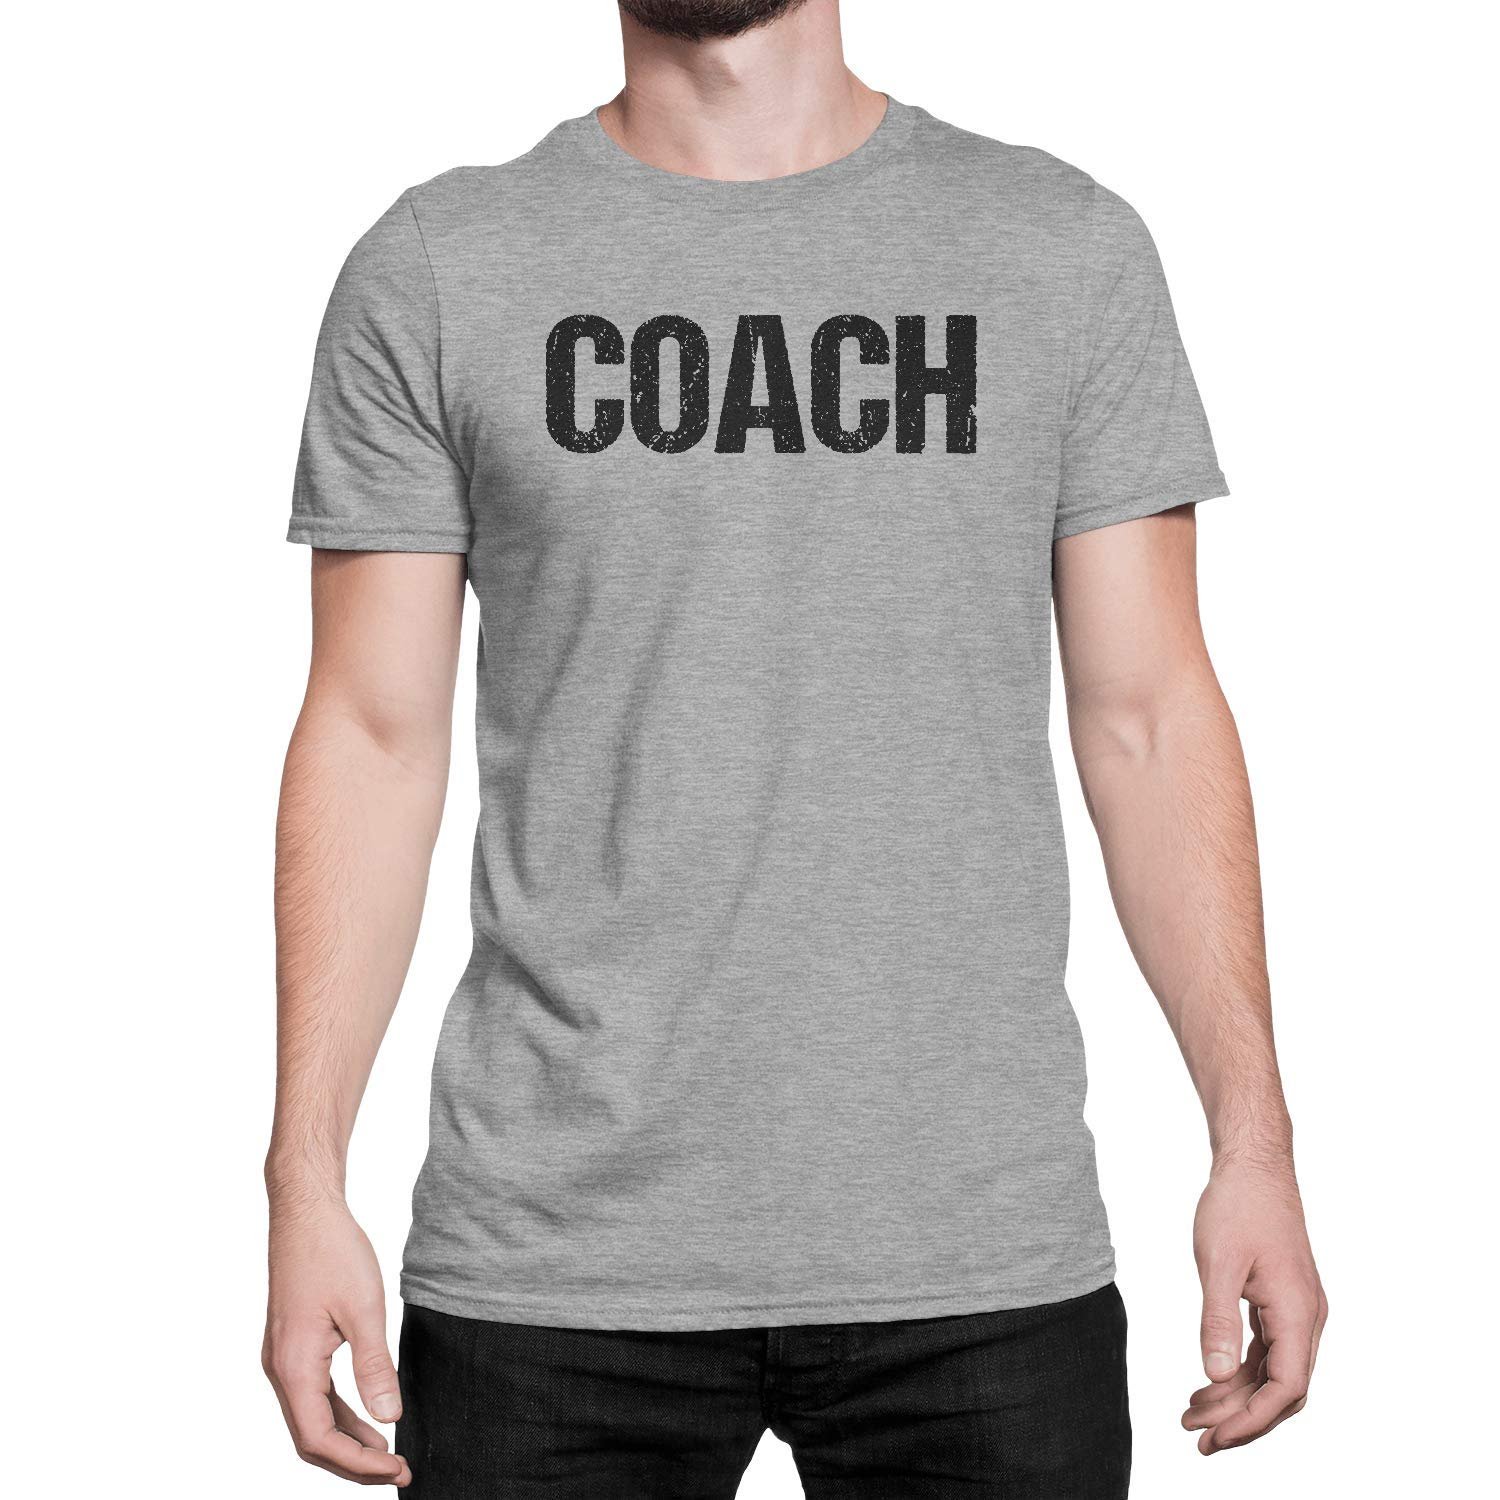 Download Heather Gray & Black Coach T-Shirt Adult Mens Tee Shirt ...